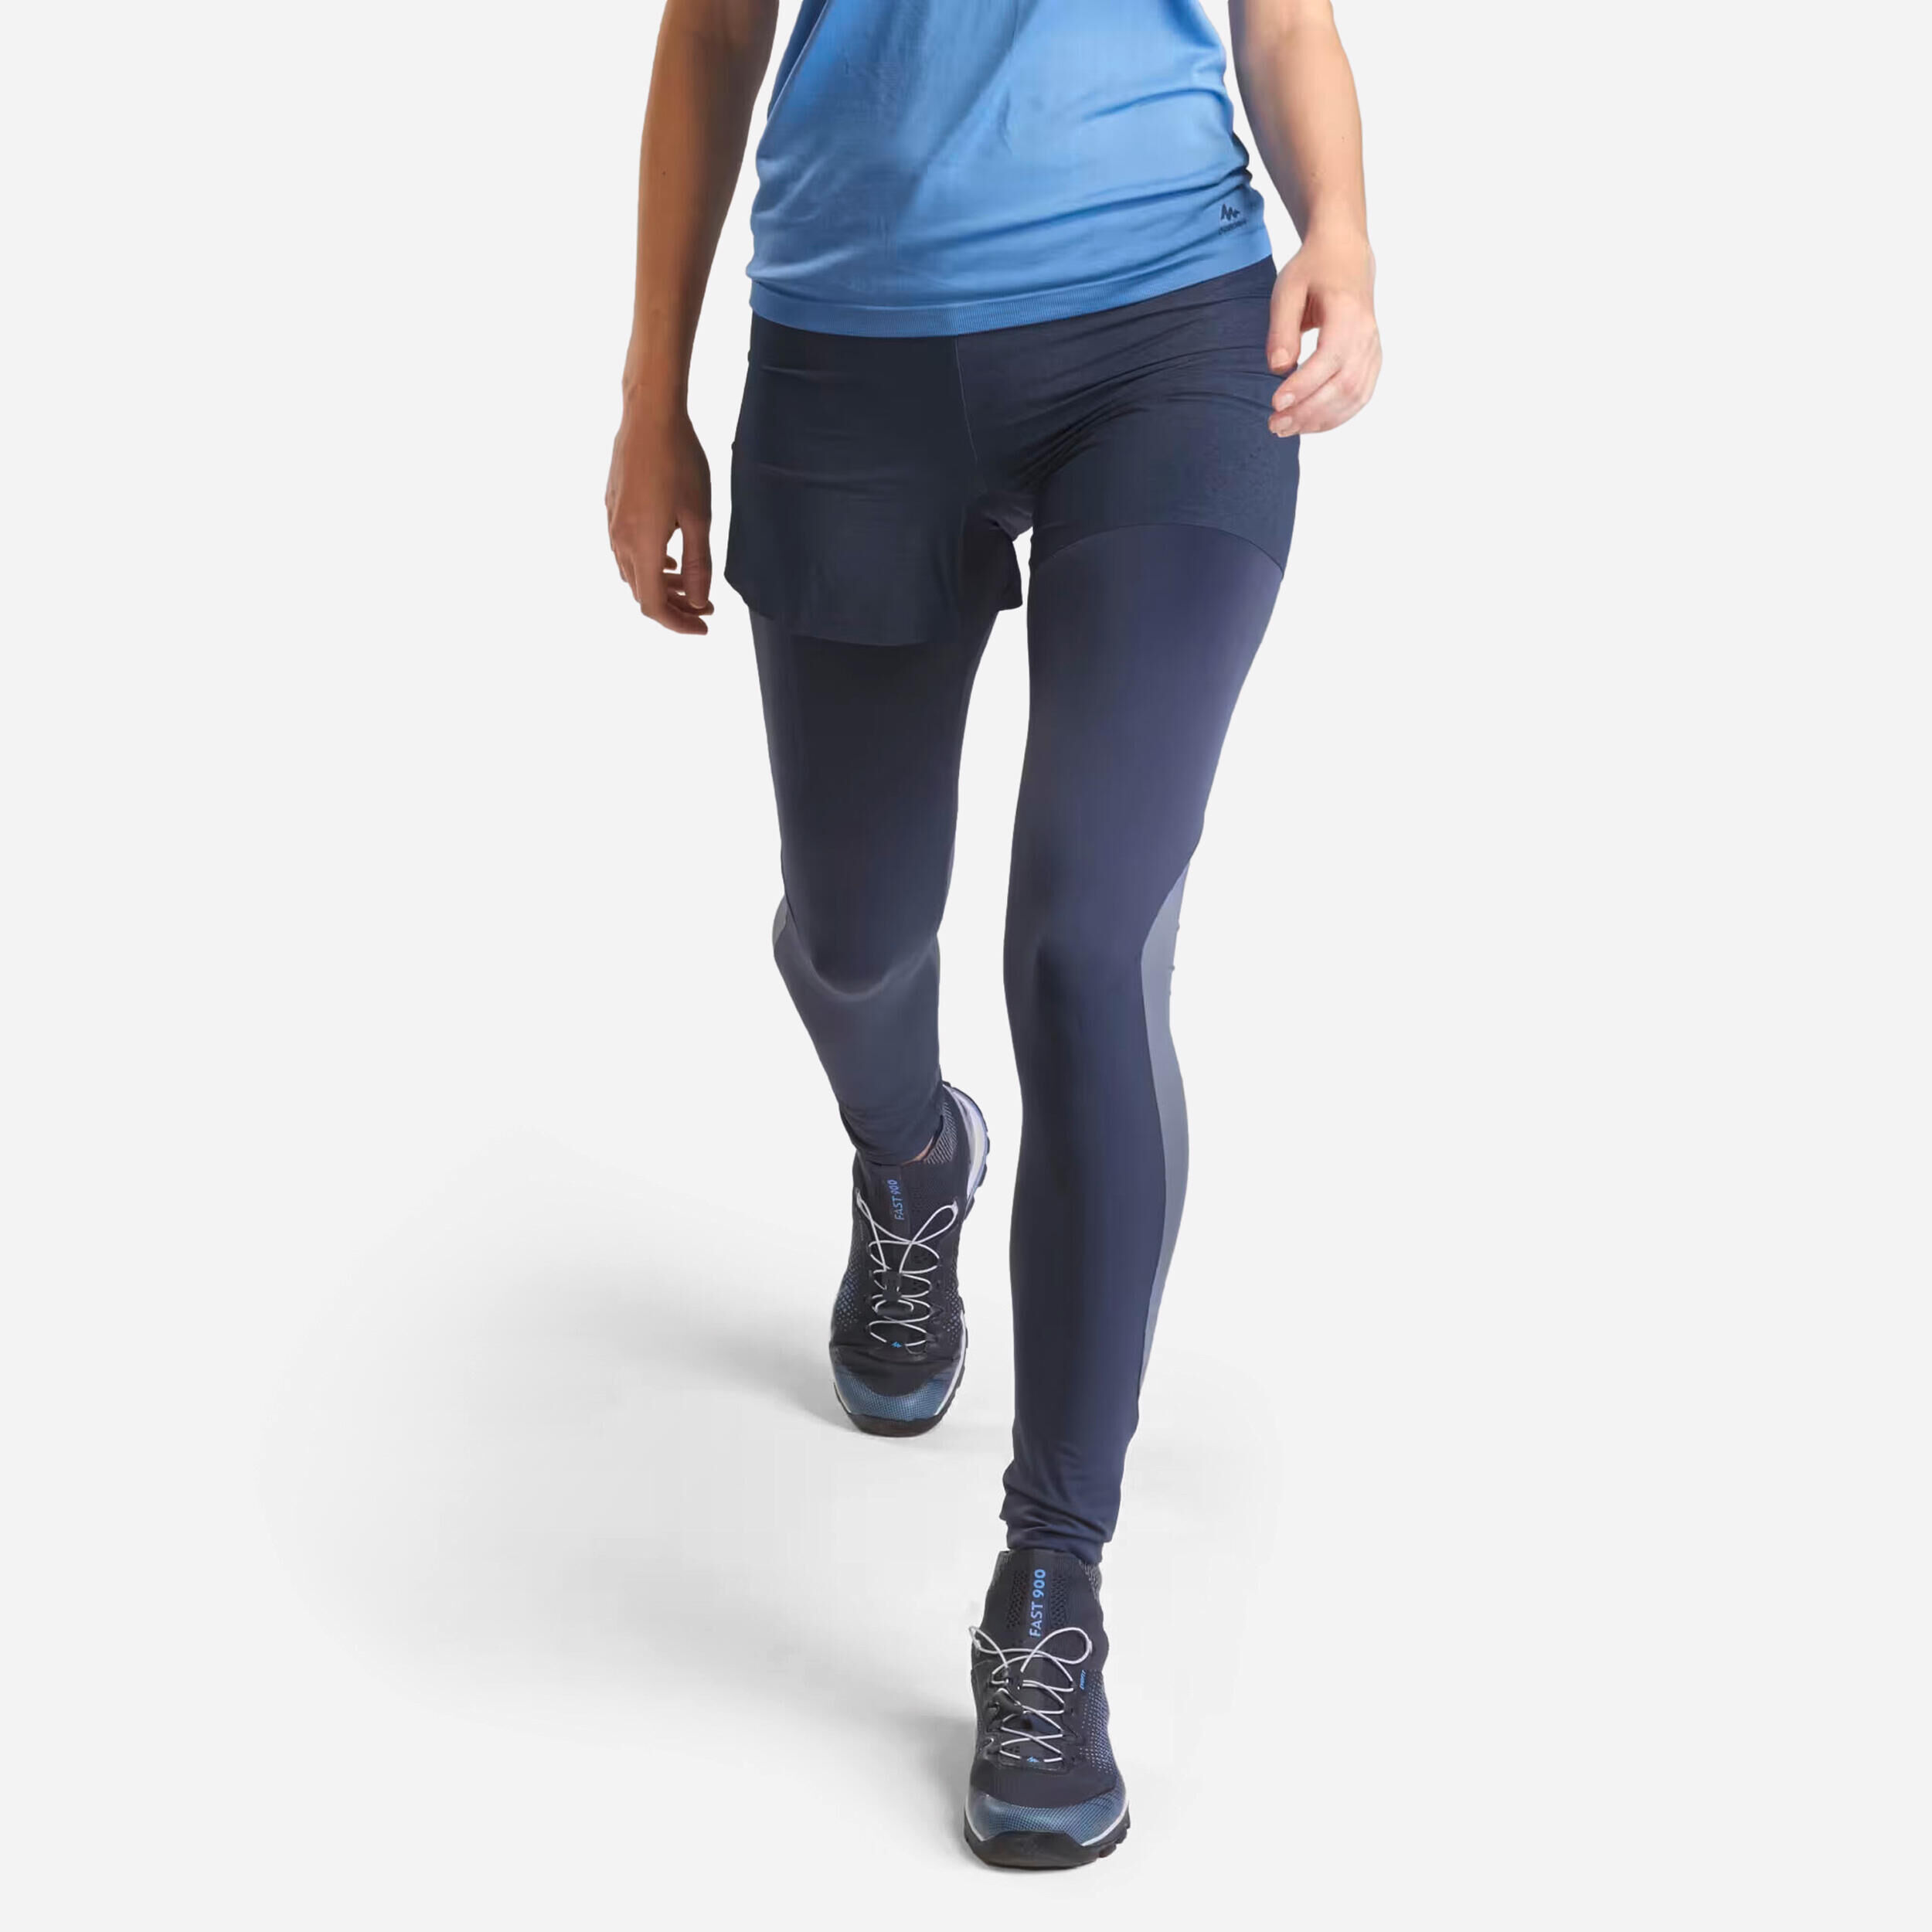 QUECHUA Women’s ultra-light short leggings - fast hiking - FH900 Blue